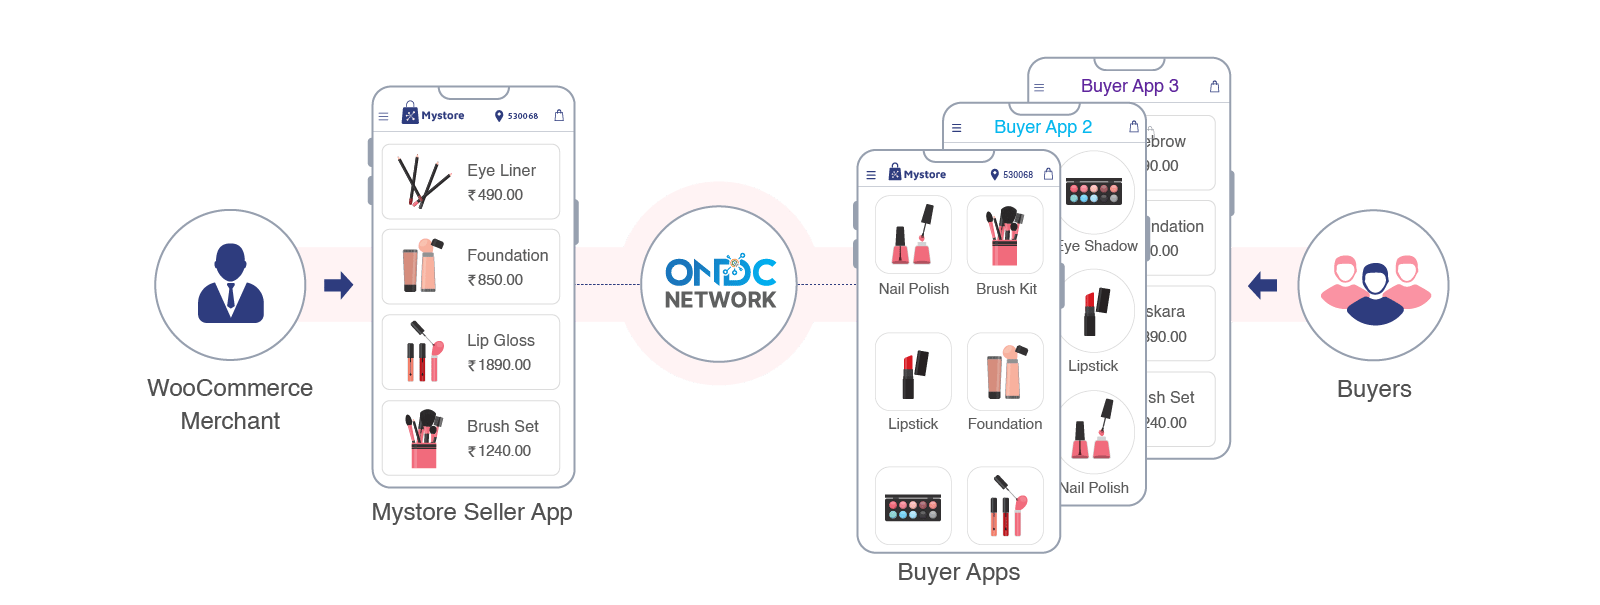 How ONDC Network works for WooCommerce Merchants